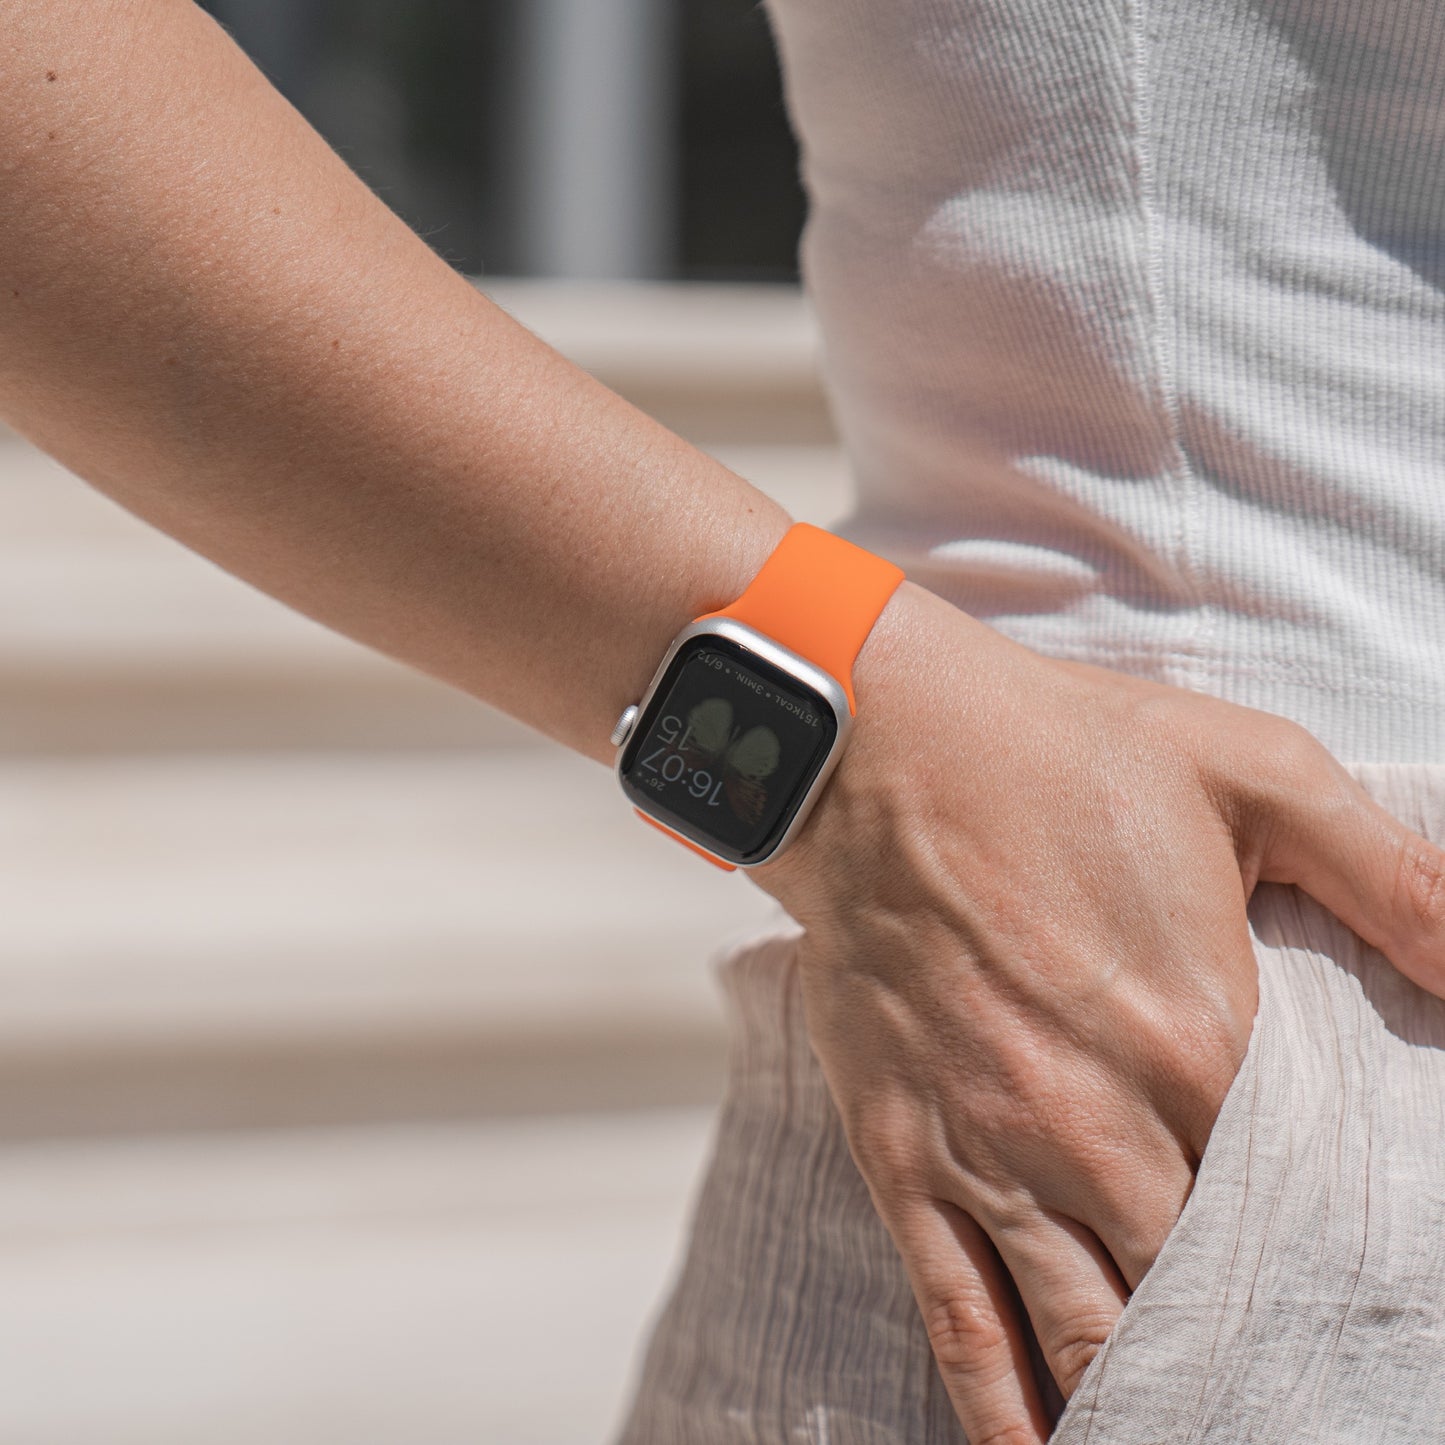 arktisband Apple Watch Silikonarmband "Aqua"